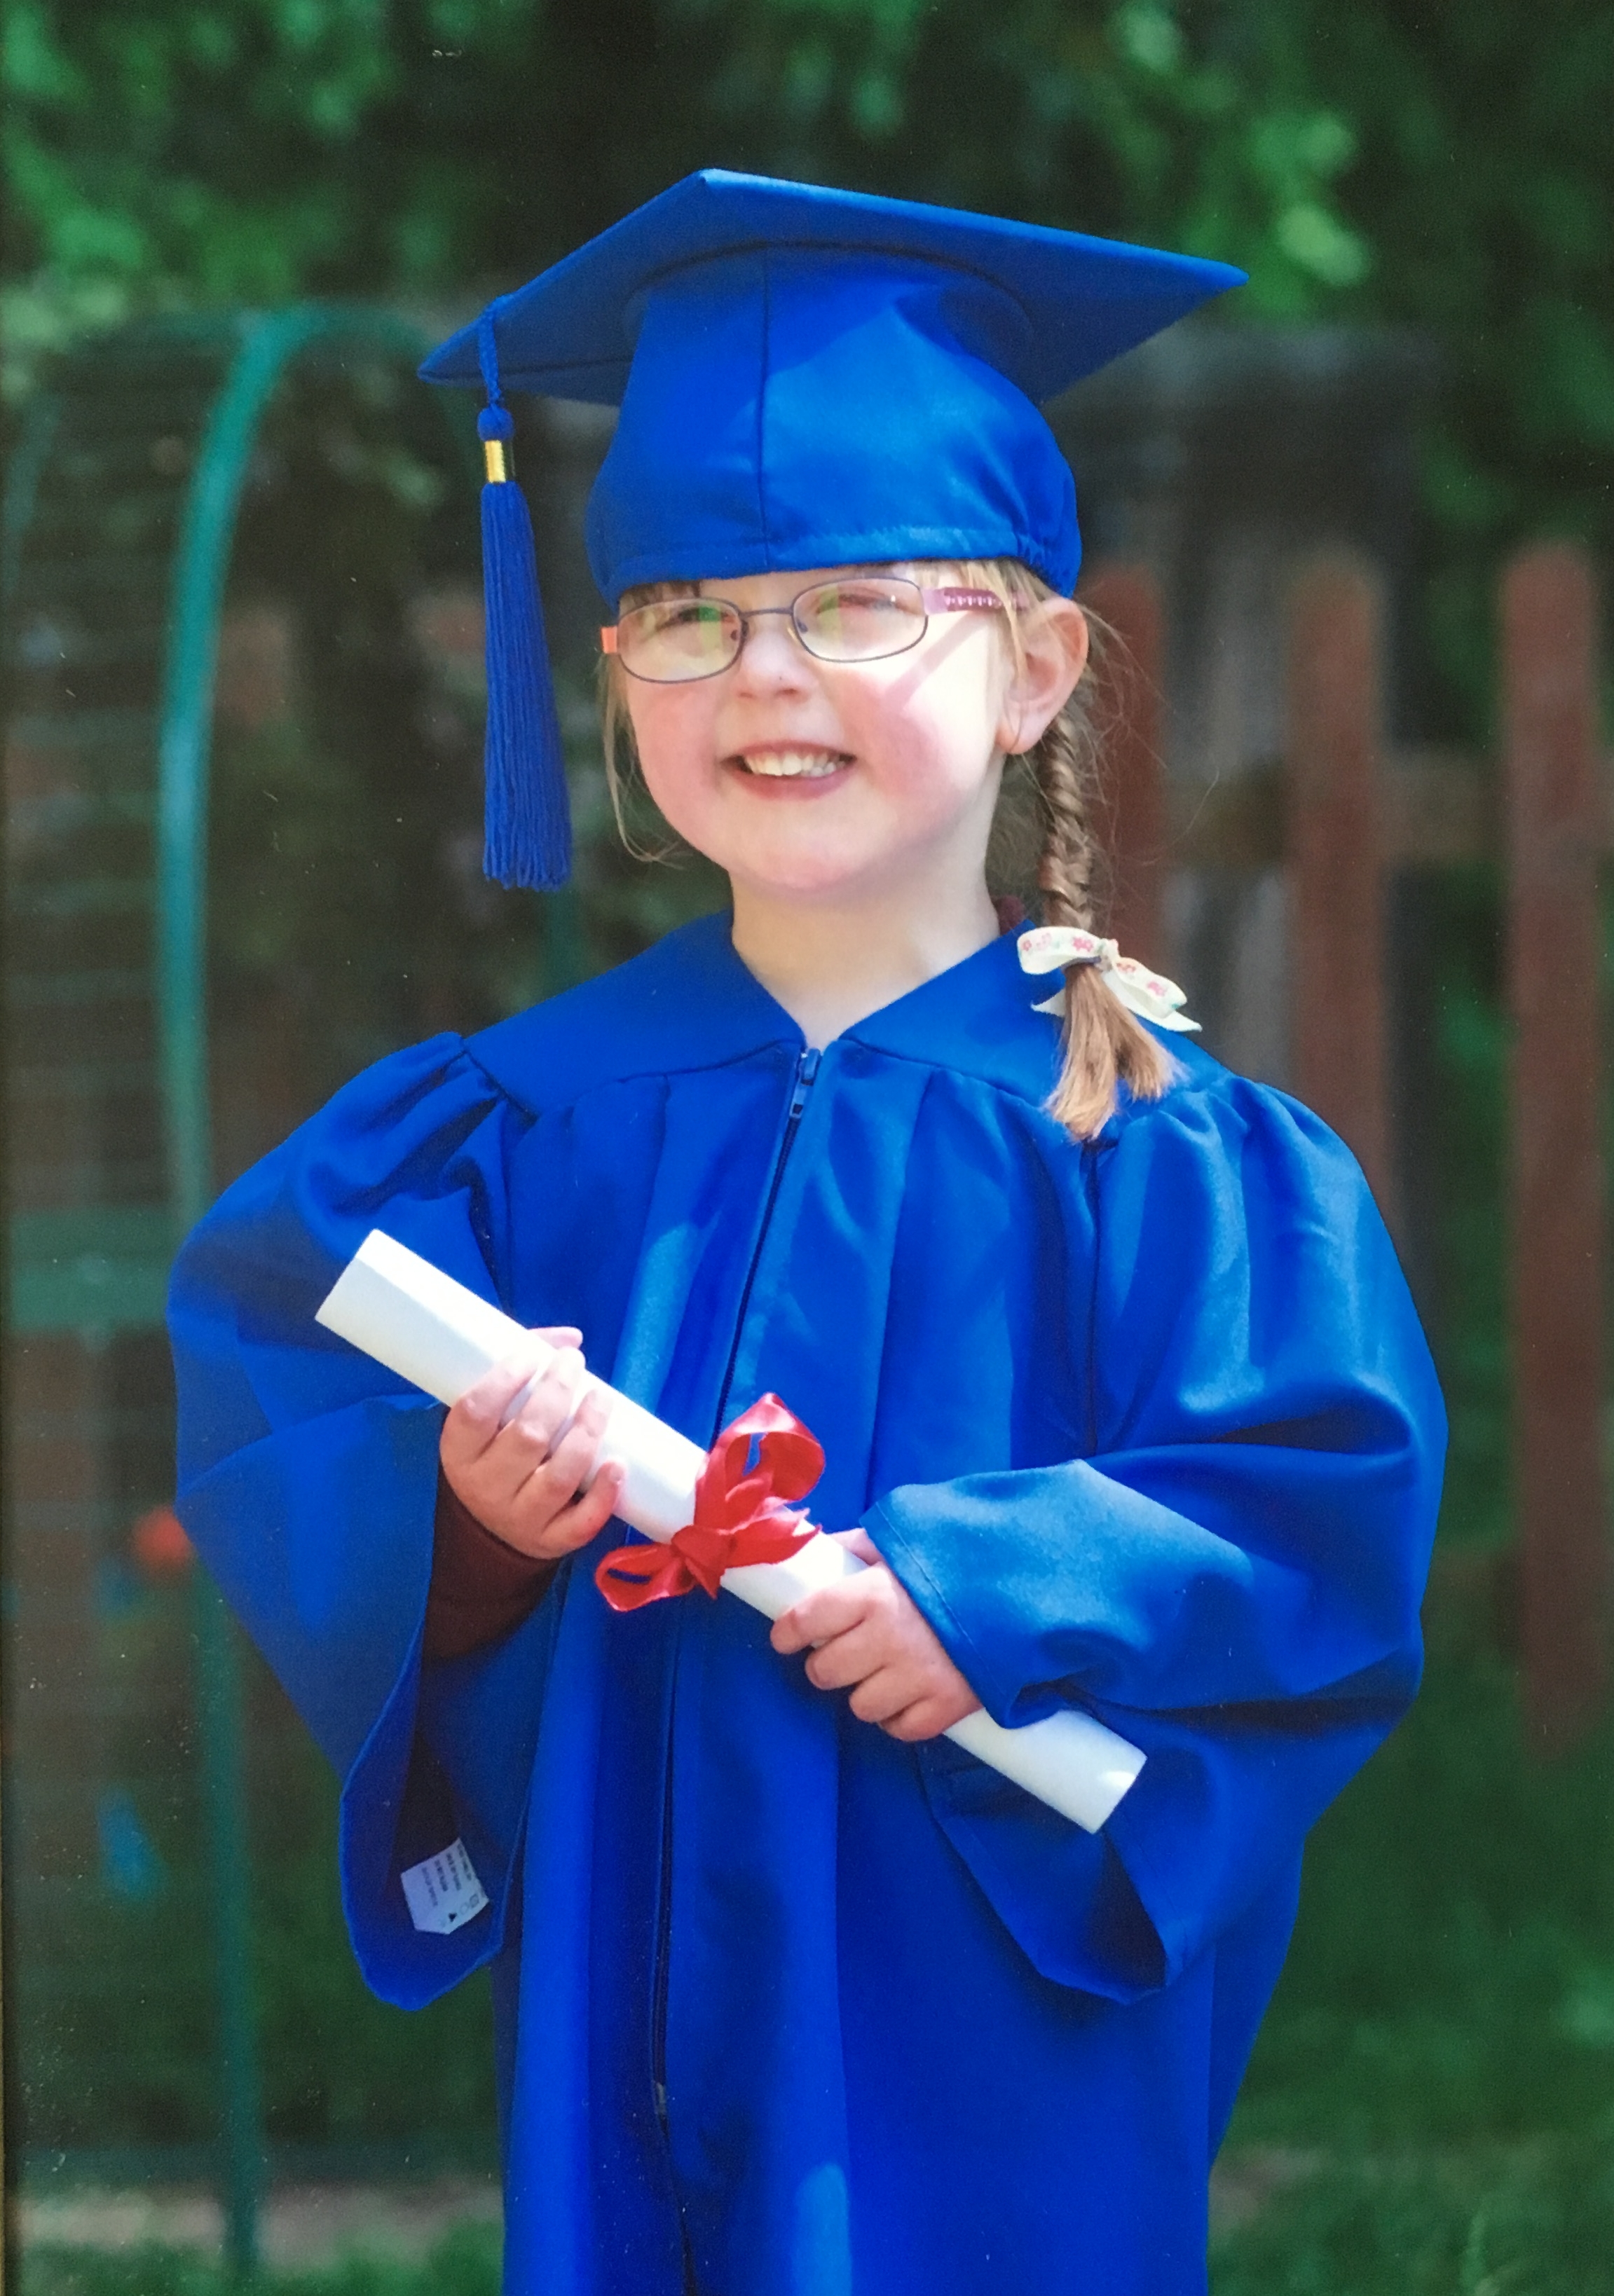 Jessica in her blue graduation gown in her preschool graduation photo